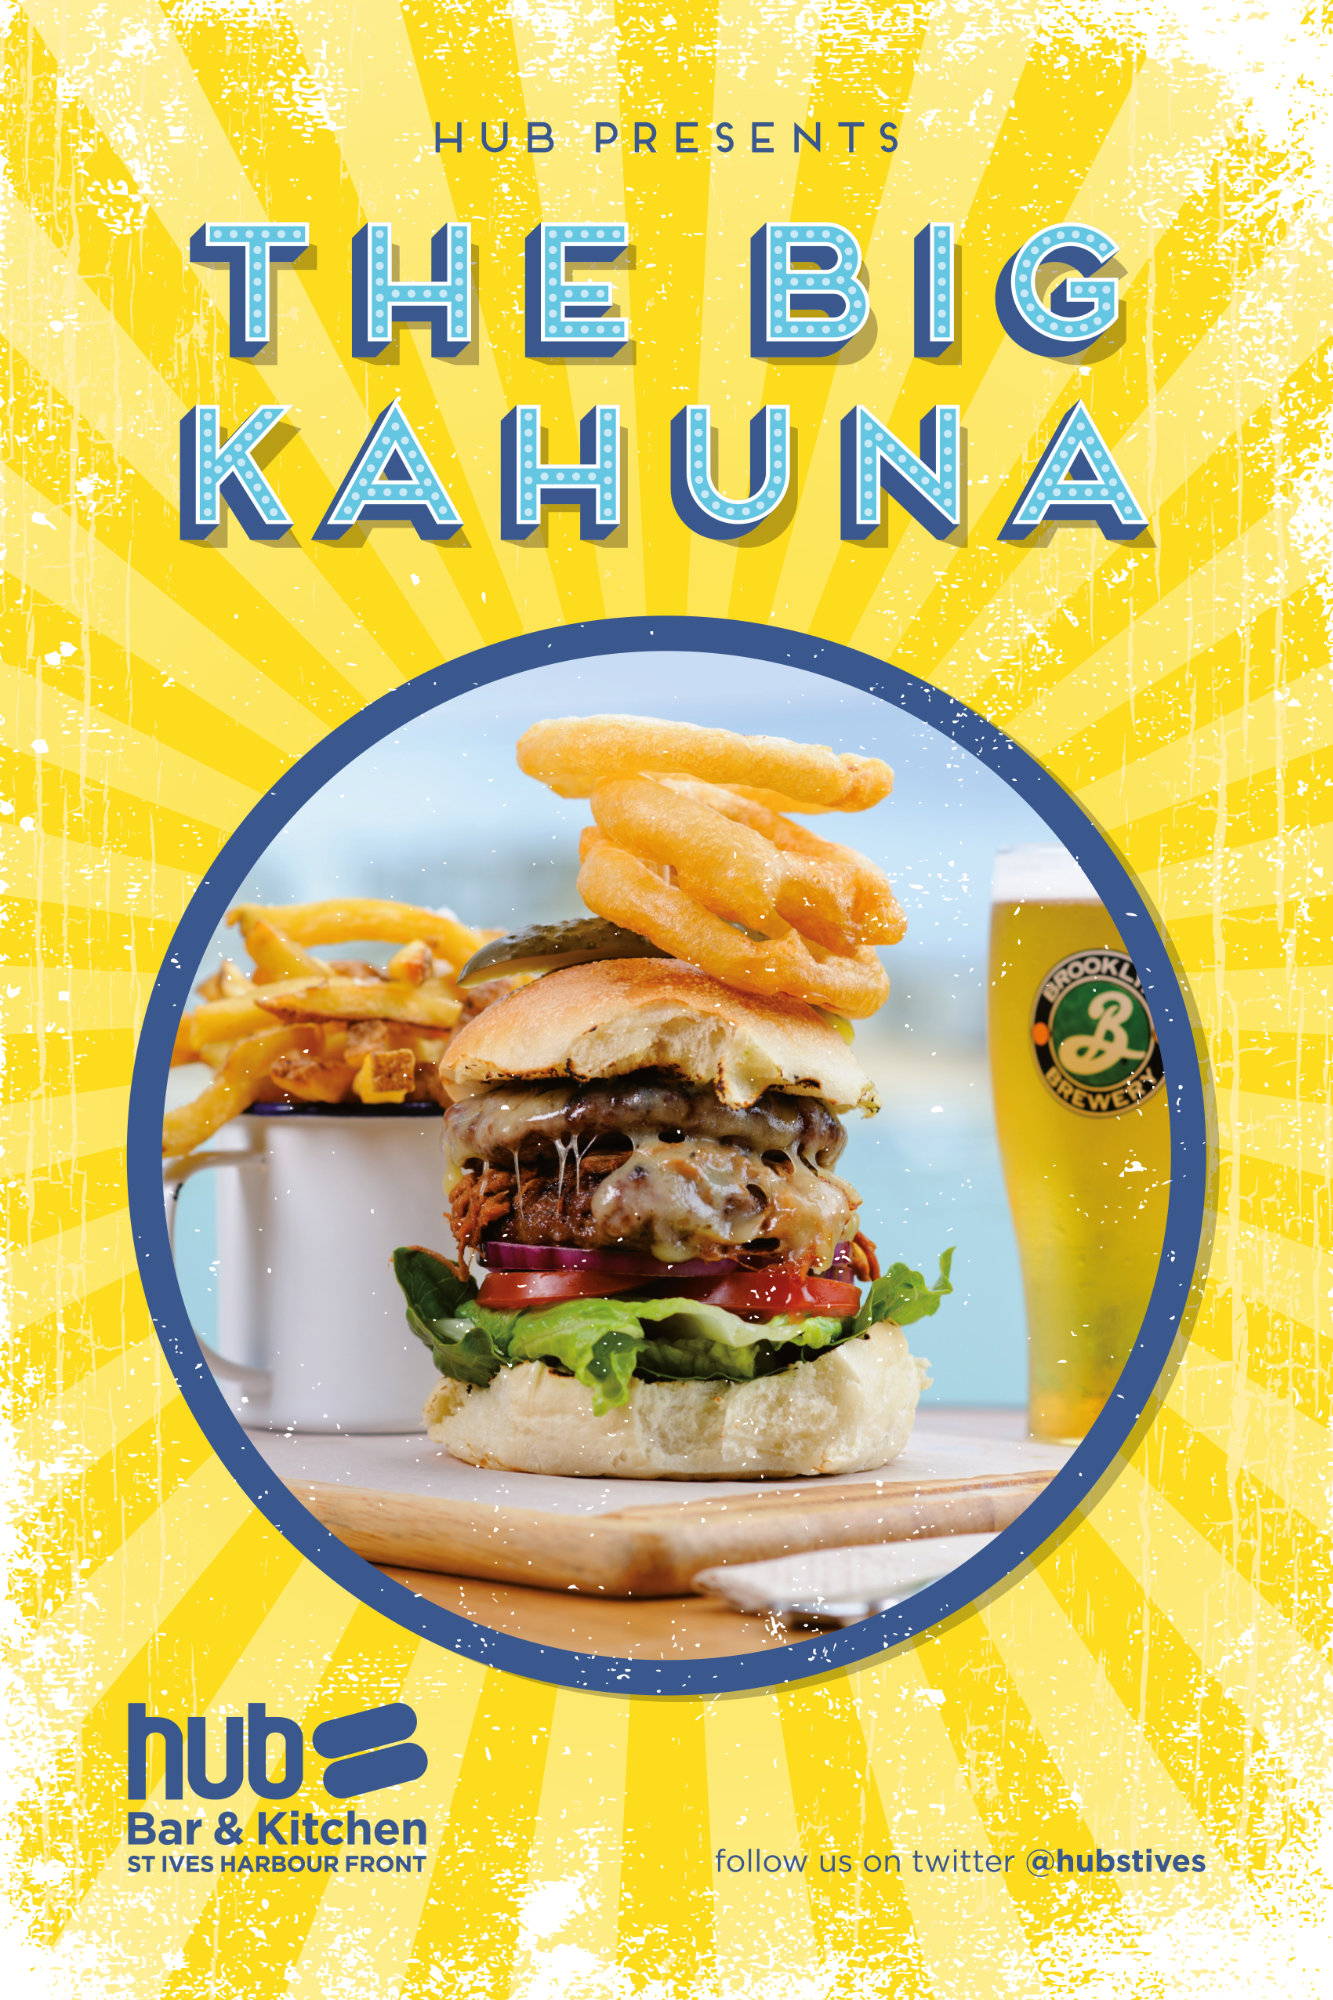 Hub-bus shelter display-big kahuna burger